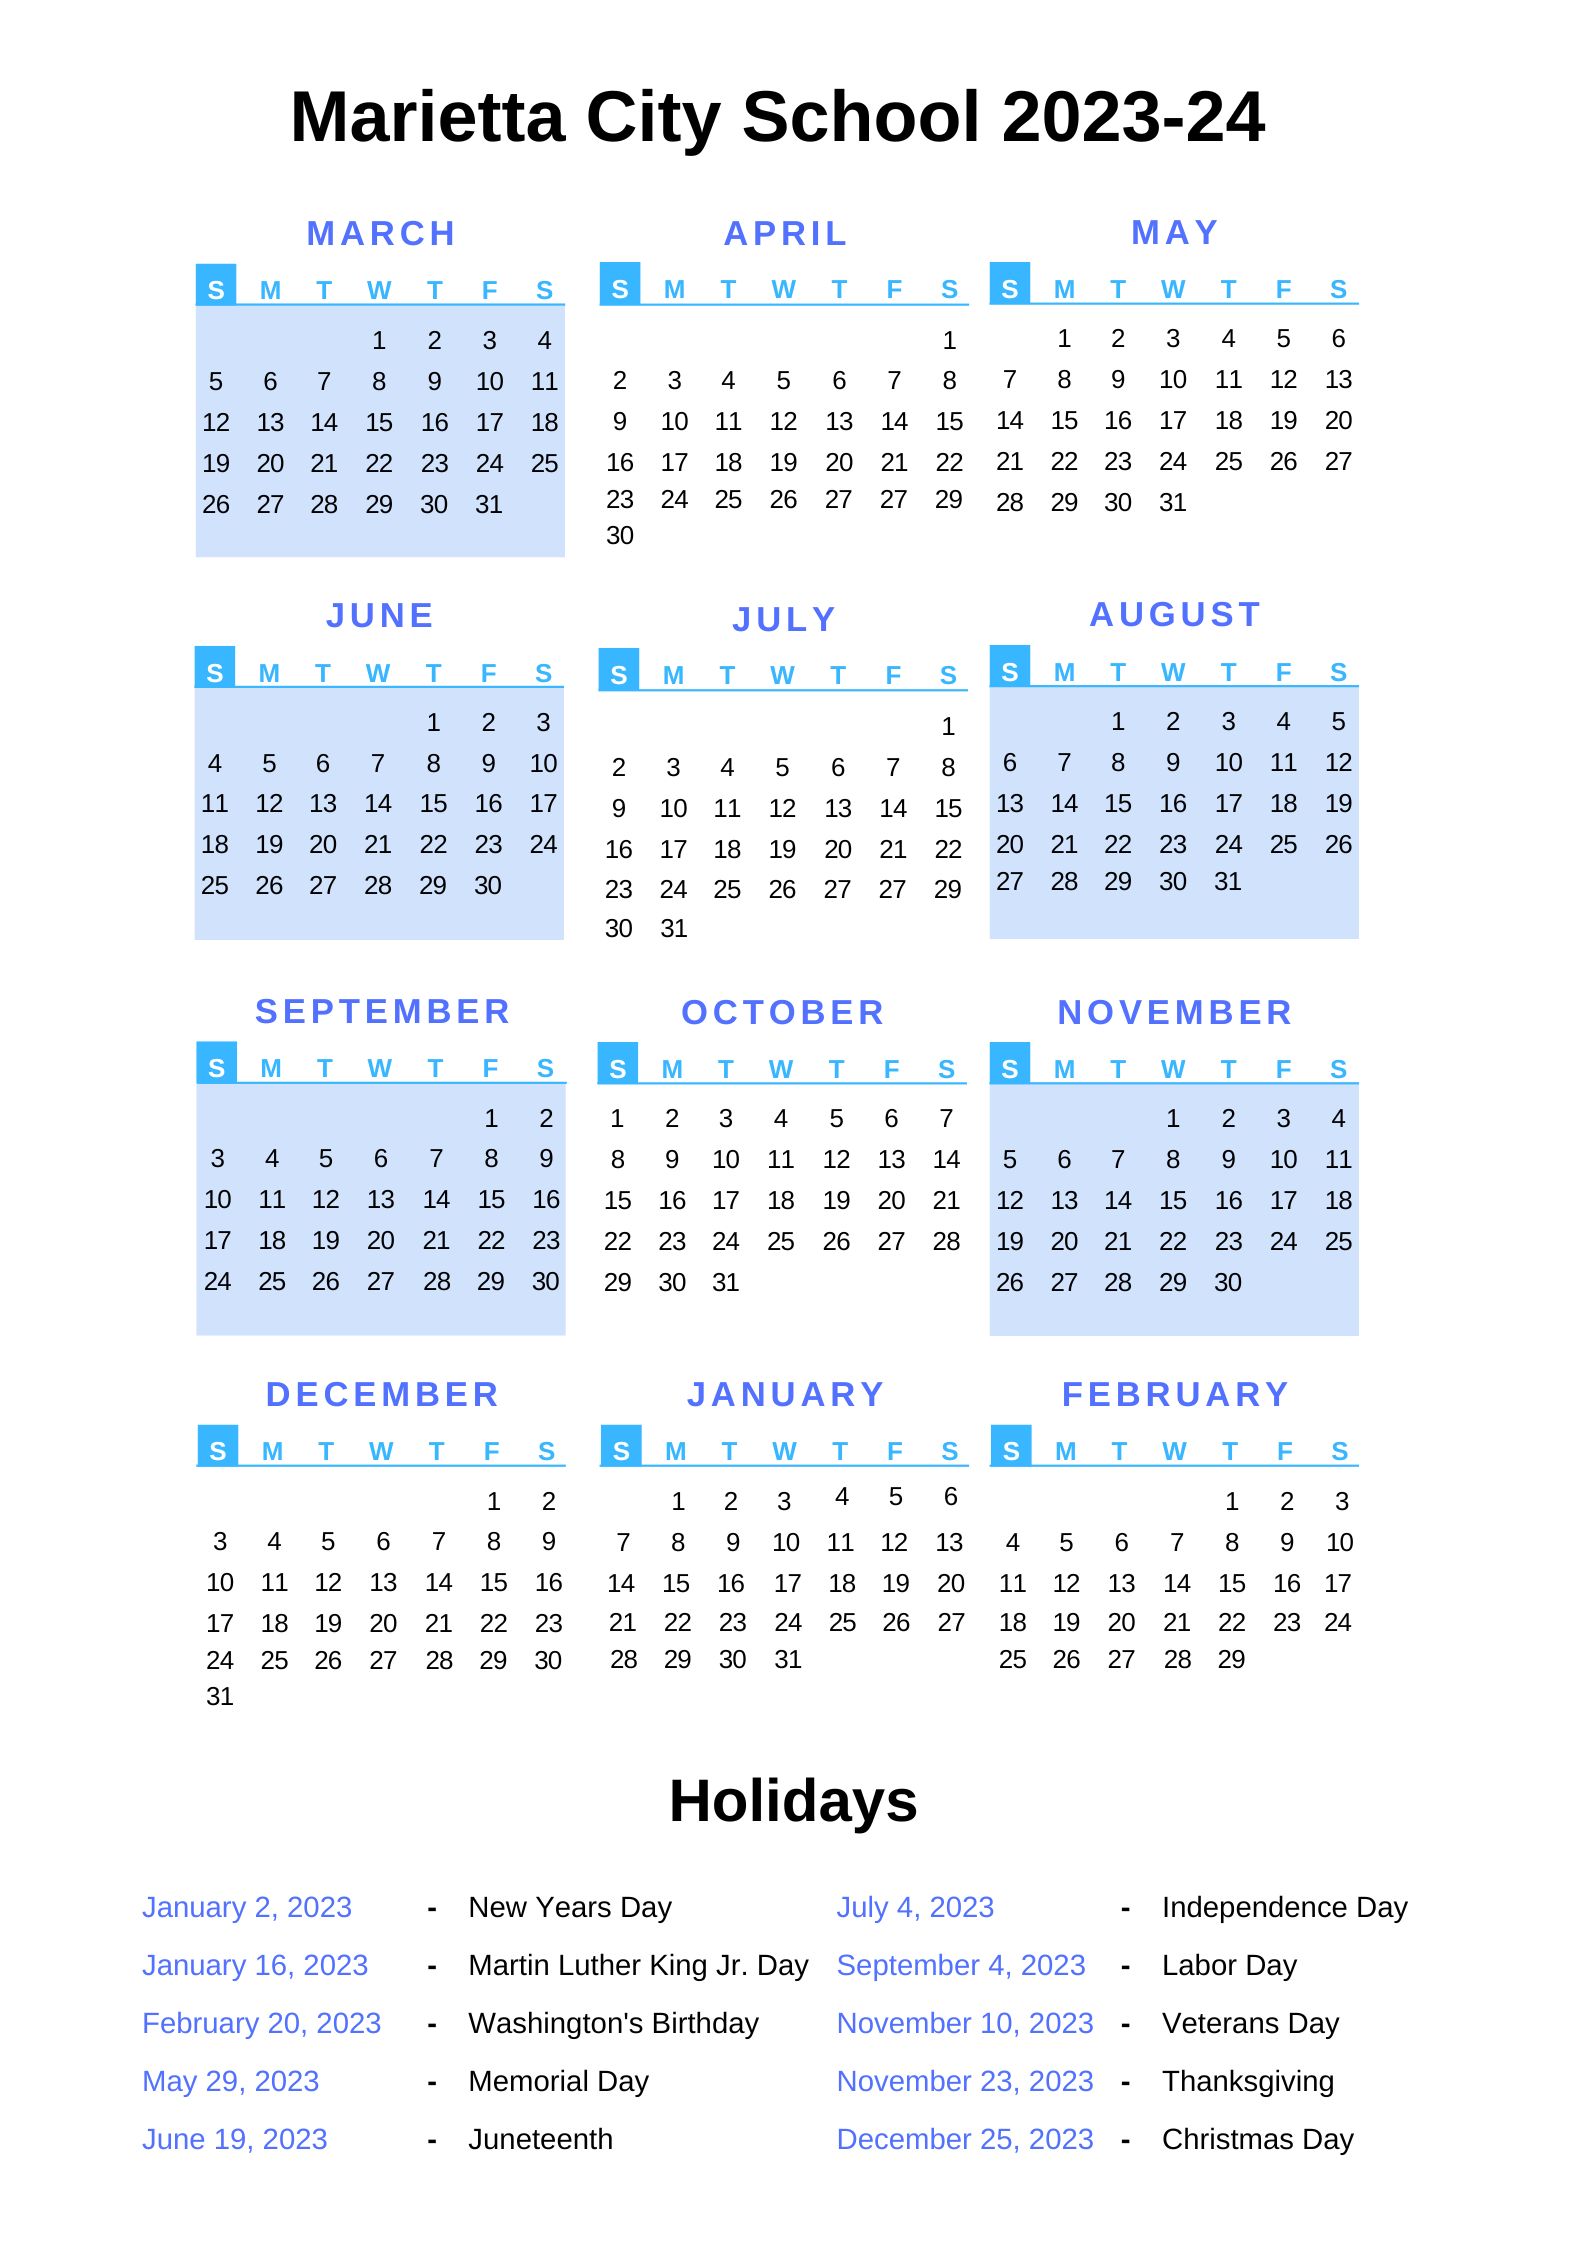 Marietta City Schools Calendar 202324 With Holidays